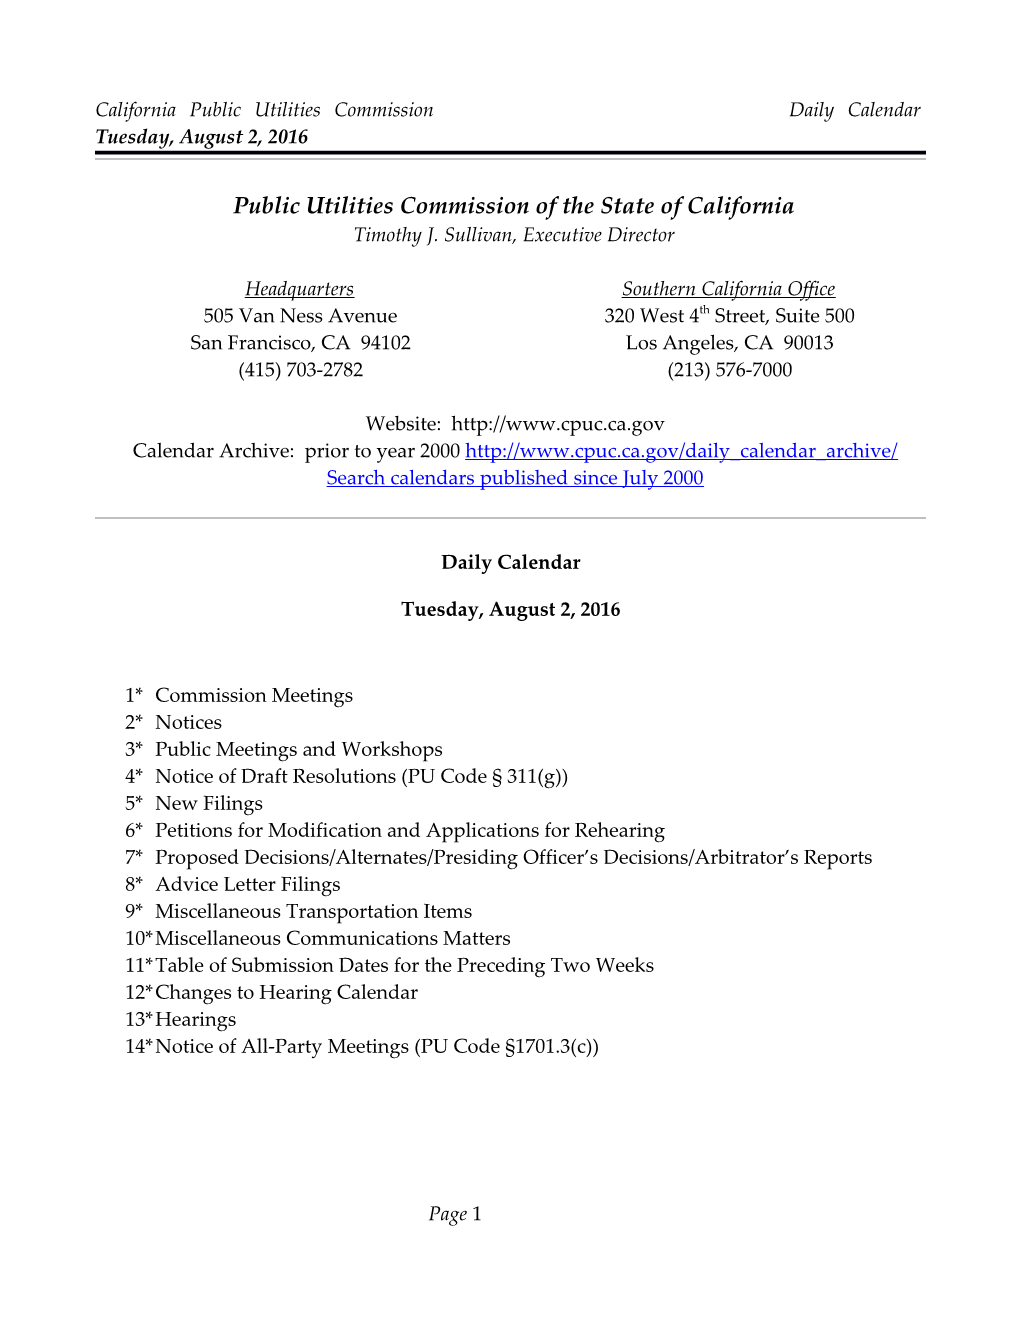 California Public Utilities Commission Daily Calendar Tuesday, August 2, 2016